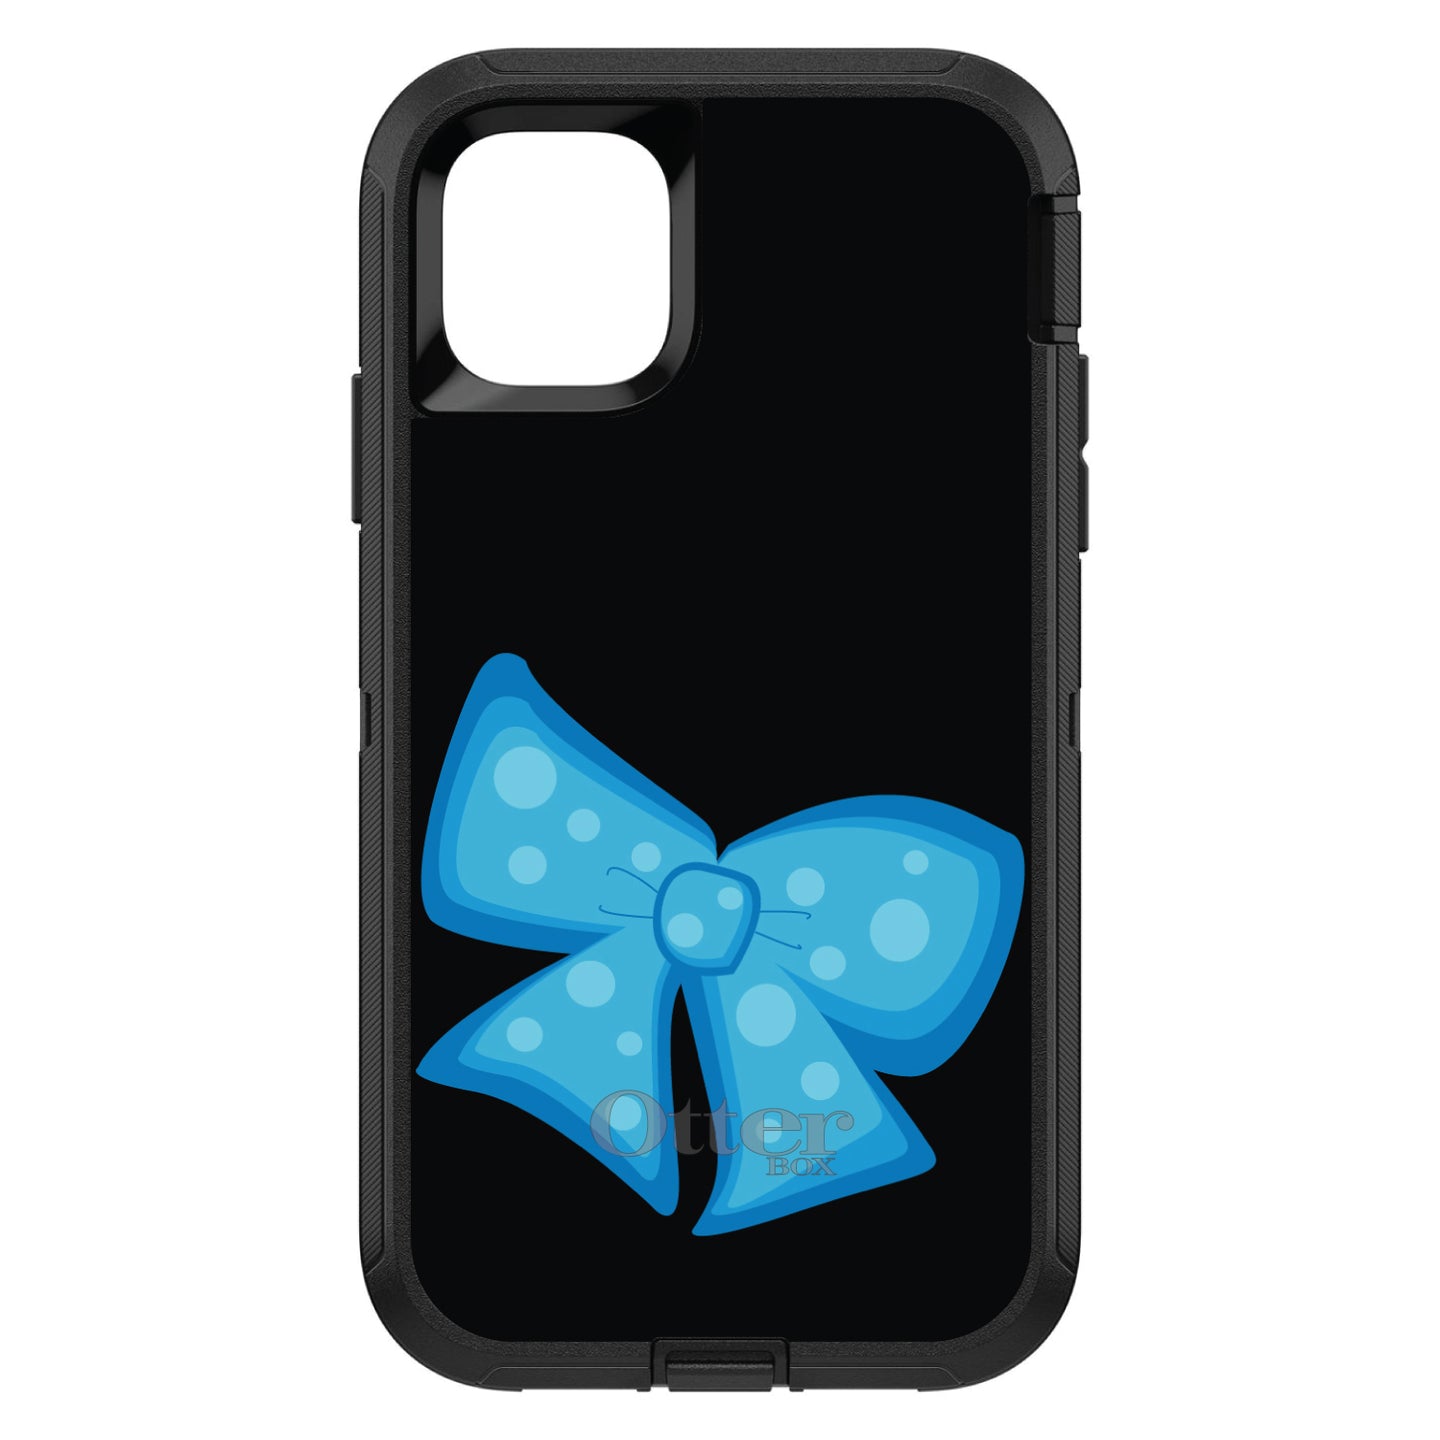 DistinctInk™ OtterBox Defender Series Case for Apple iPhone / Samsung Galaxy / Google Pixel - Light Blue Black Bow Ribbon